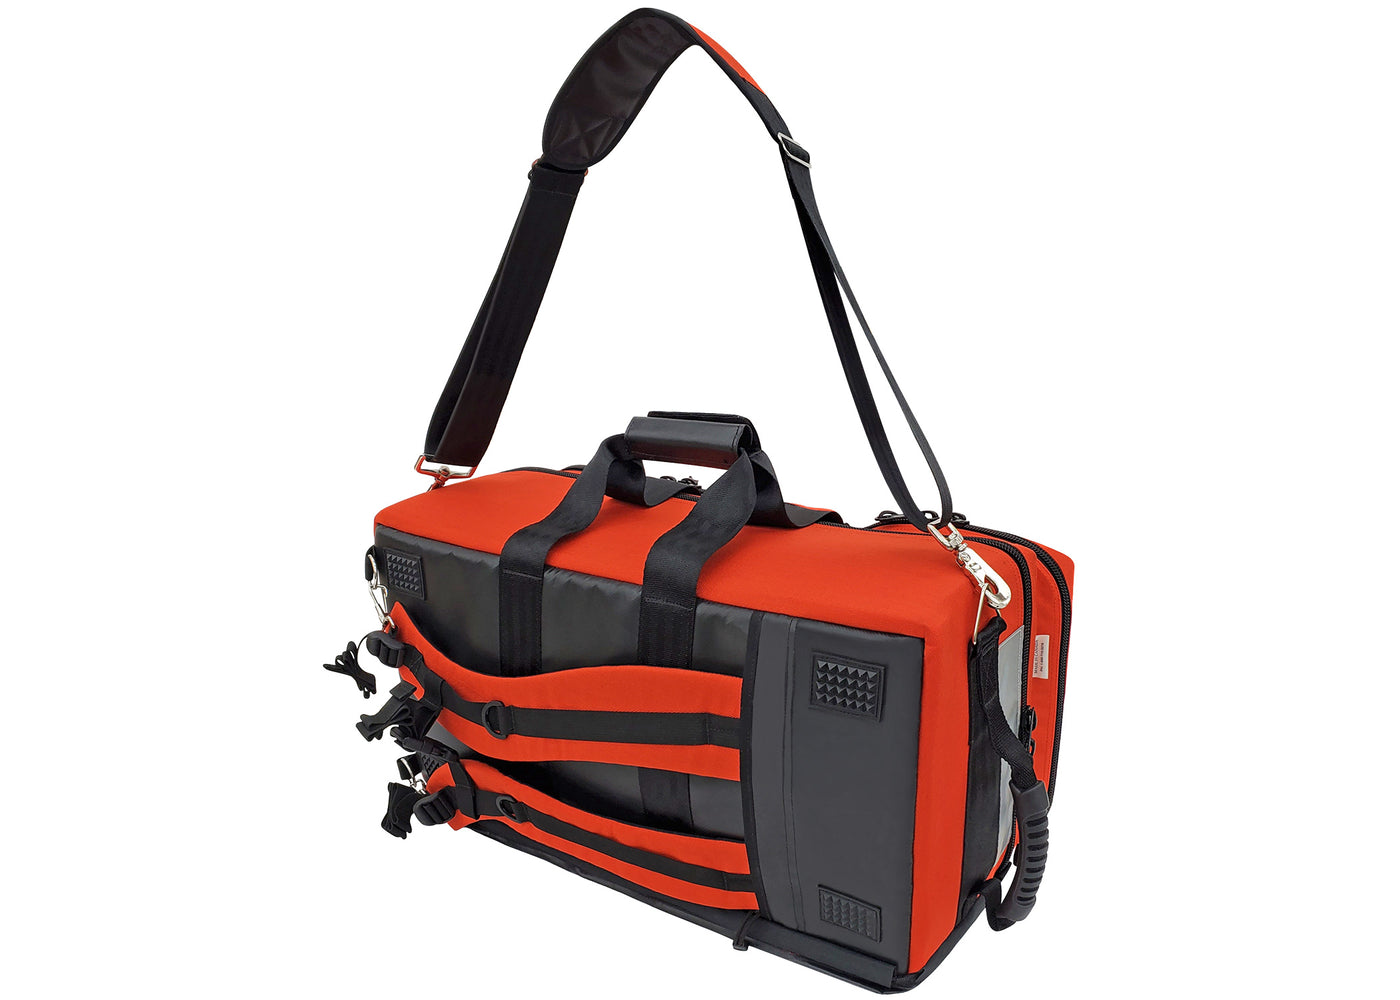 Oxygen/Airway Management Carry Bag (BACK1053)